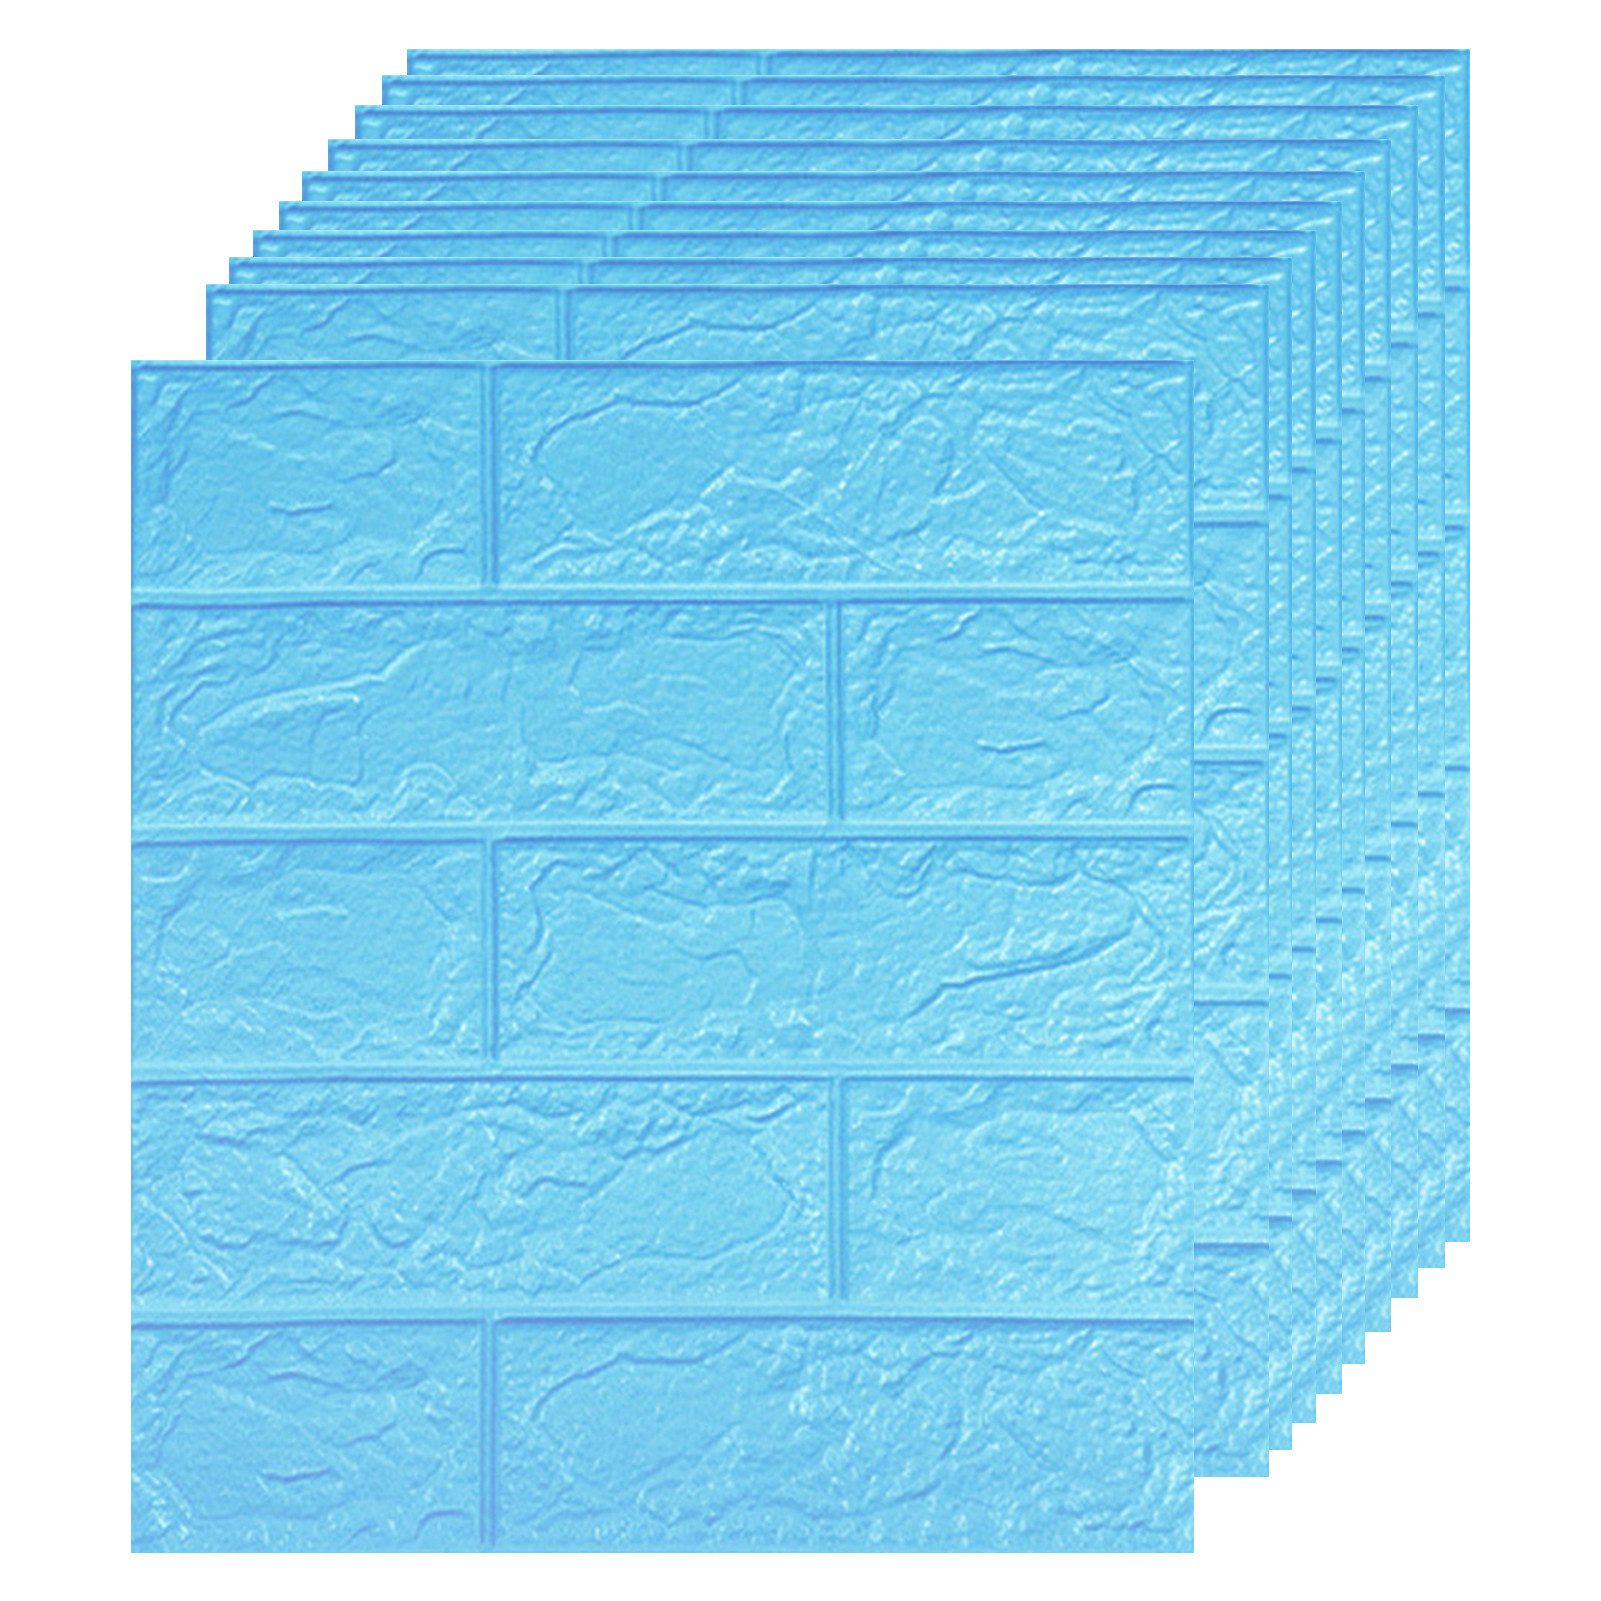 Henreal 3D-Wandtattoo Wandaufkleber Steinoptik Wasserdicht,10 Stücke 35 * 38CM Weiß 1.3m²